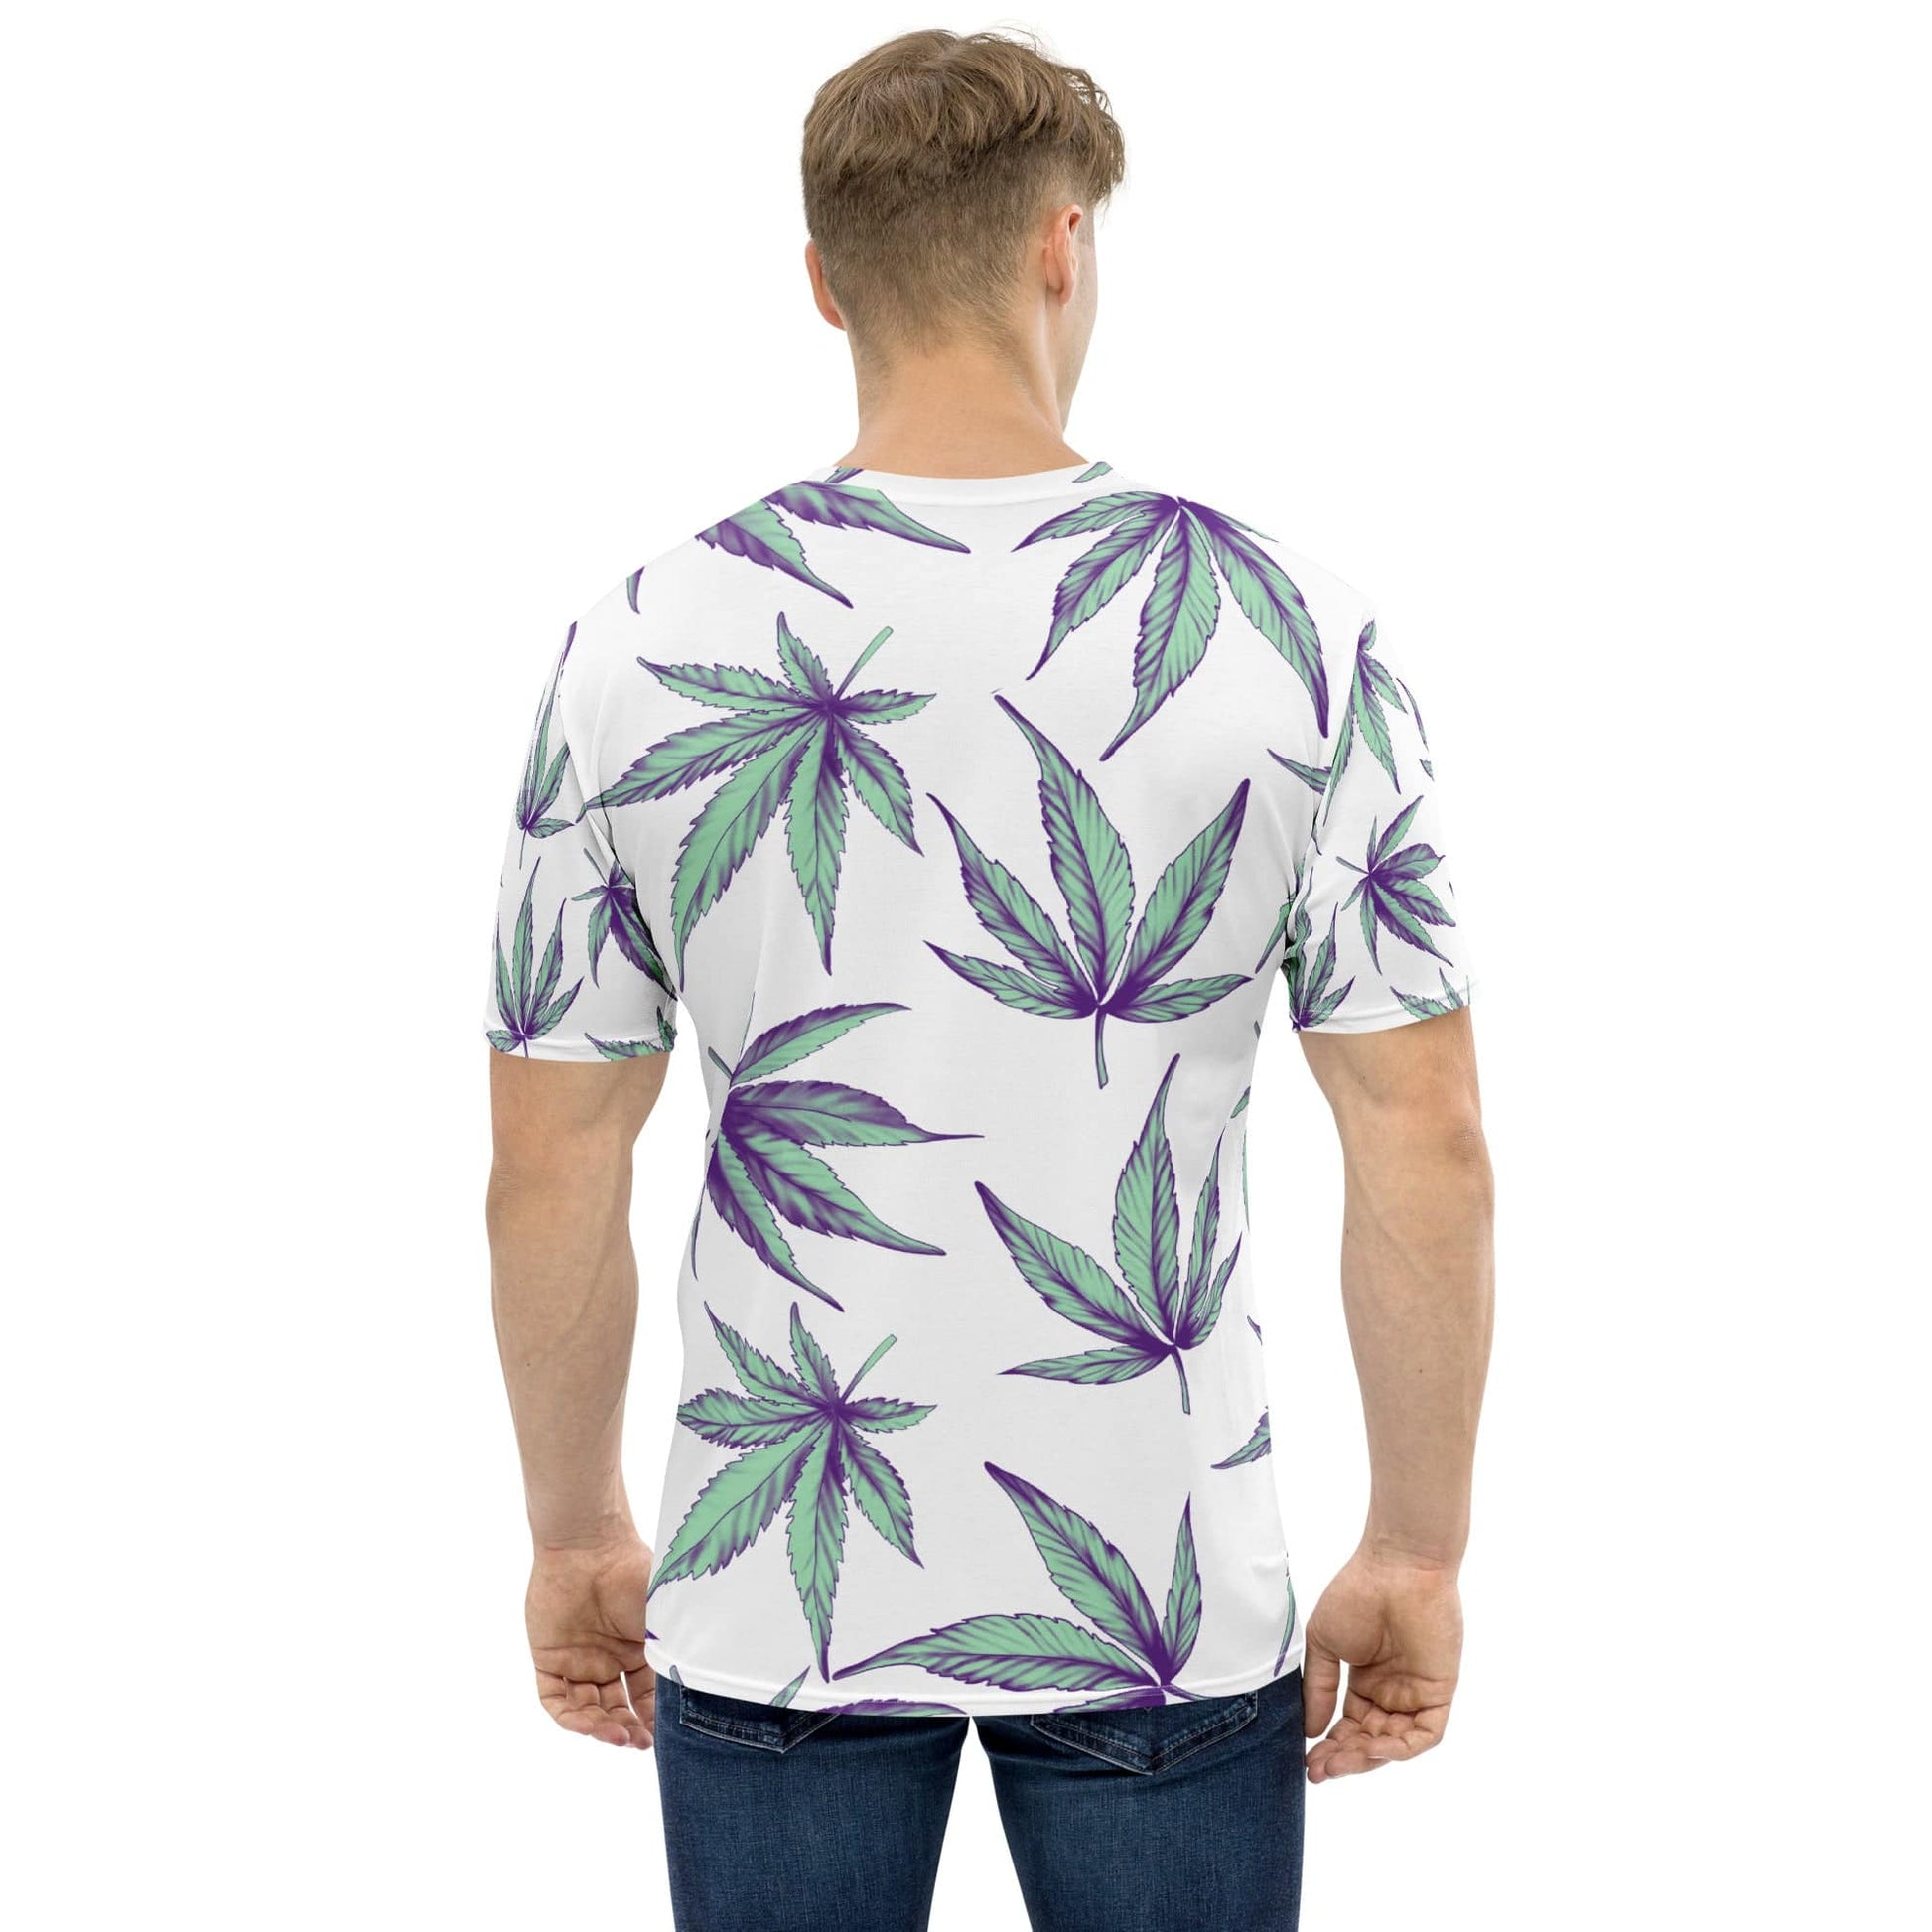 Men's Cannabis Minty Leaf T-Shirt - The Cannabis Community